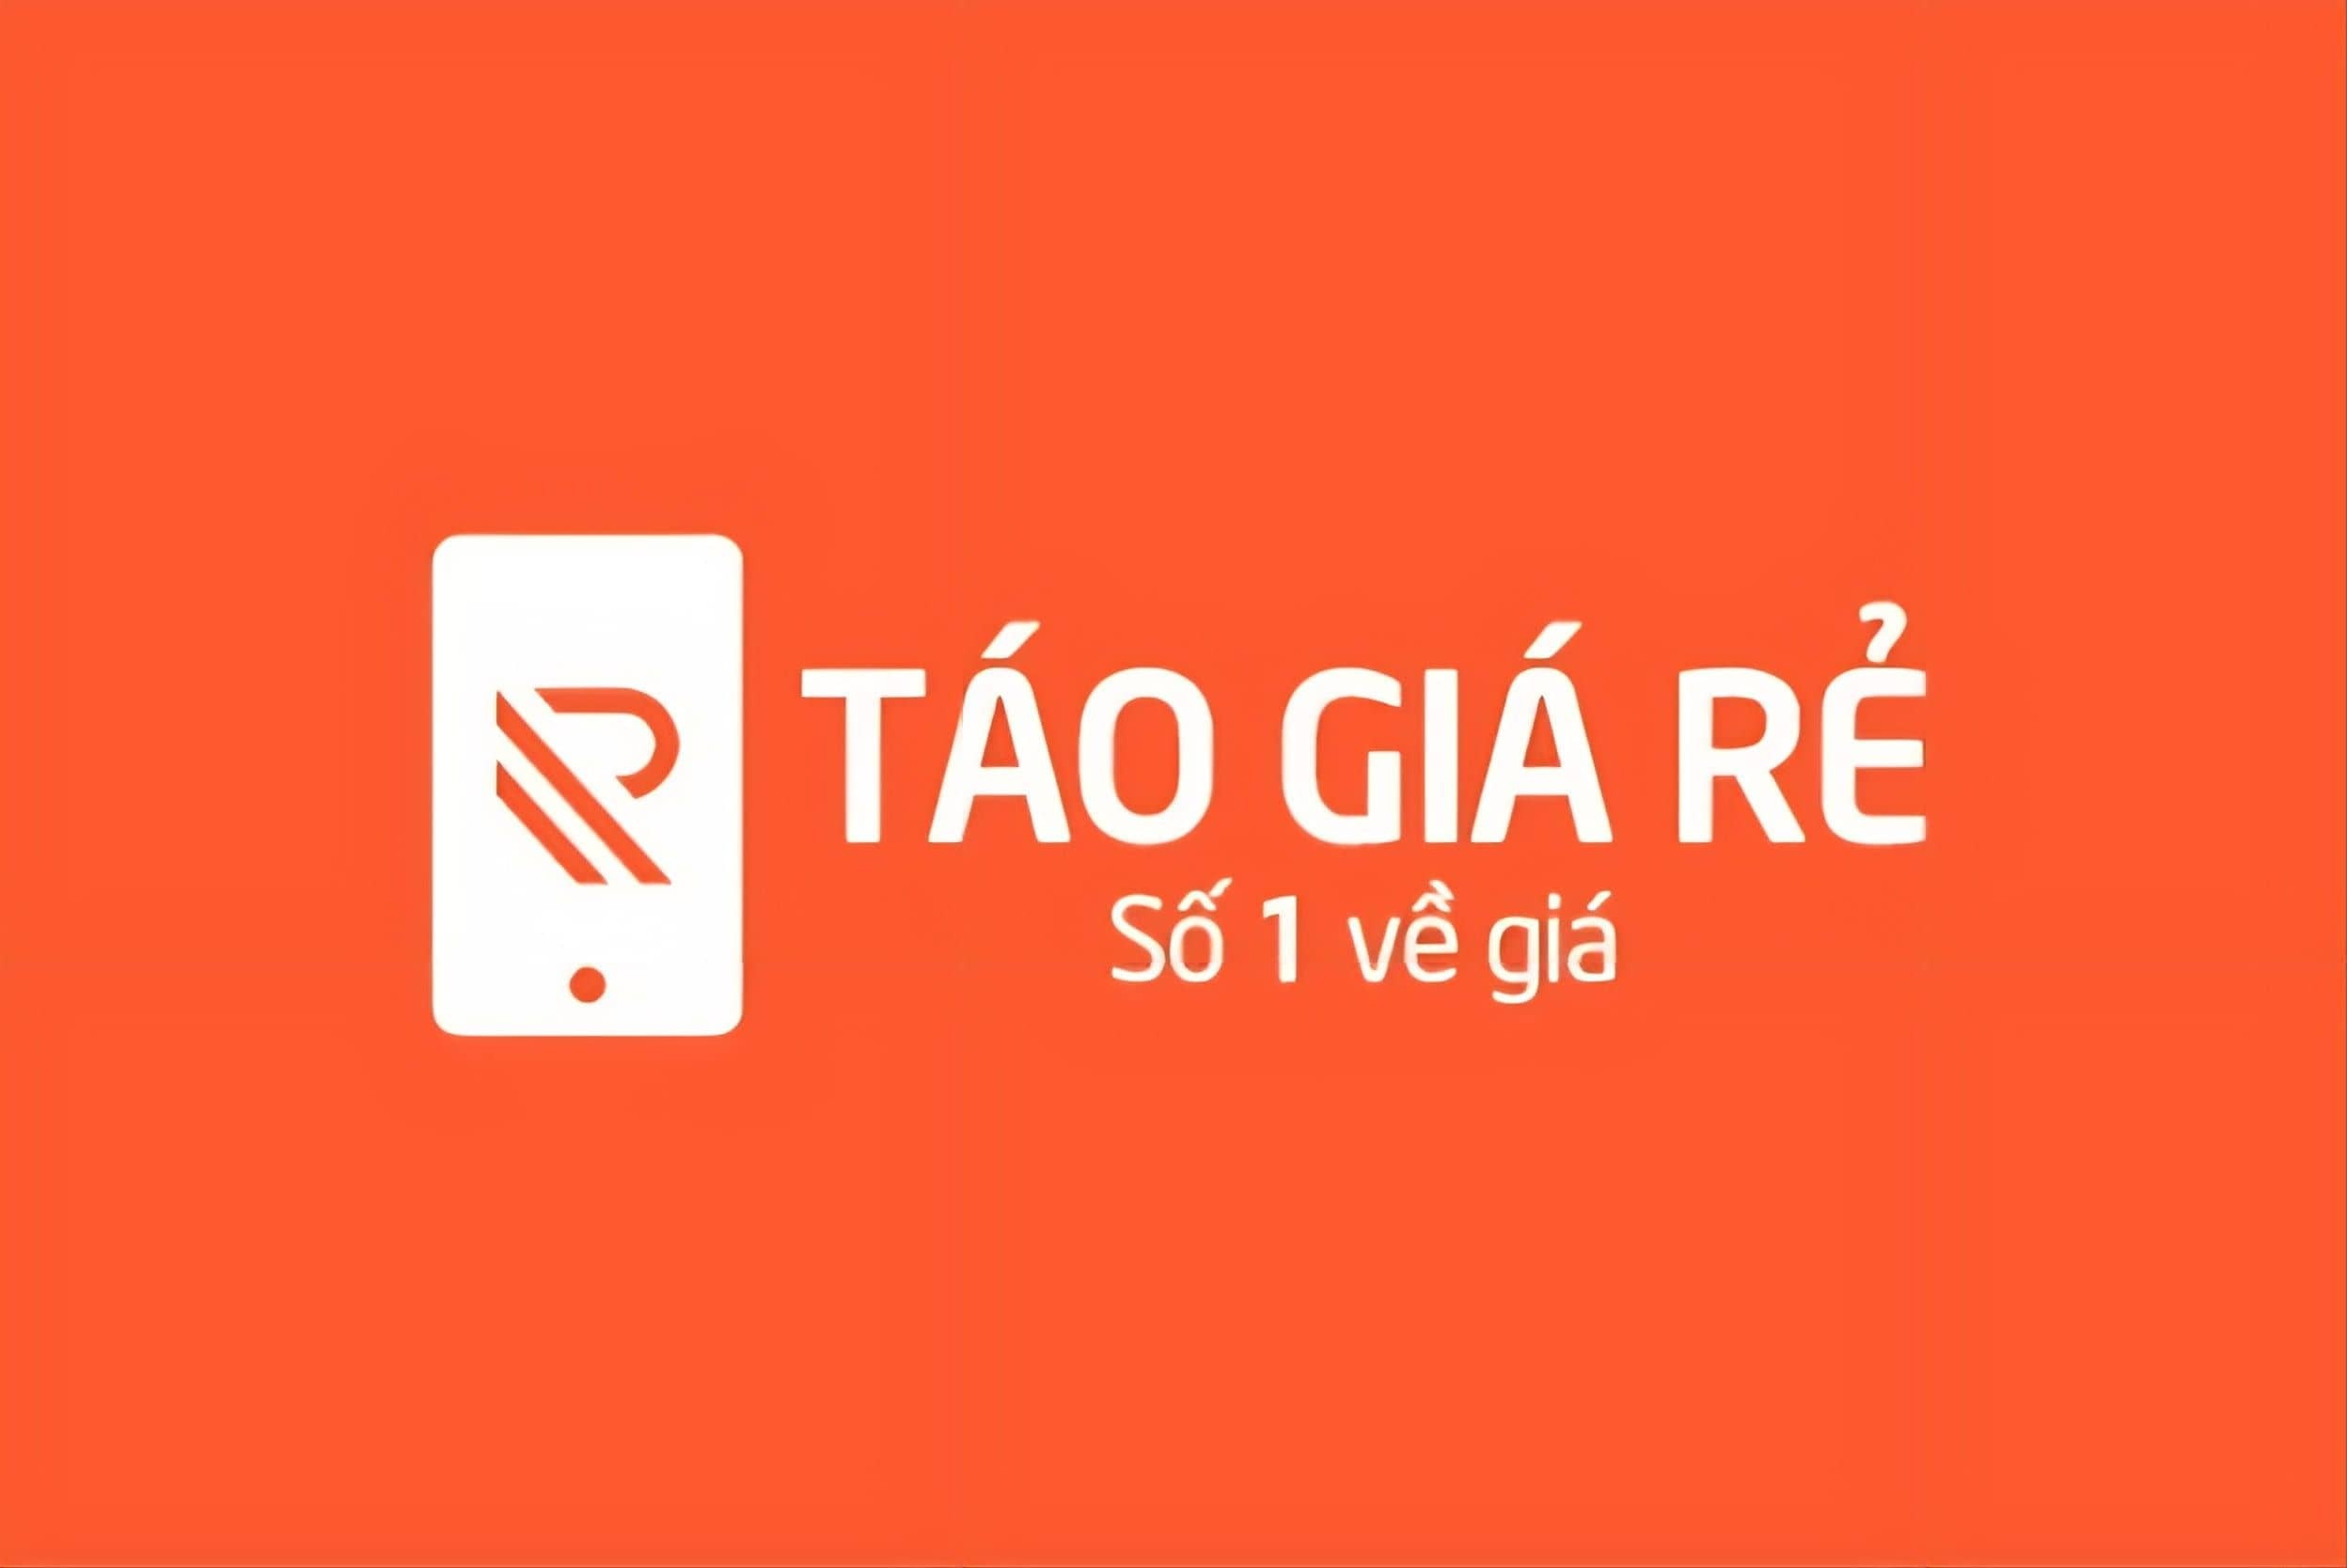 tao-gia-re-logo